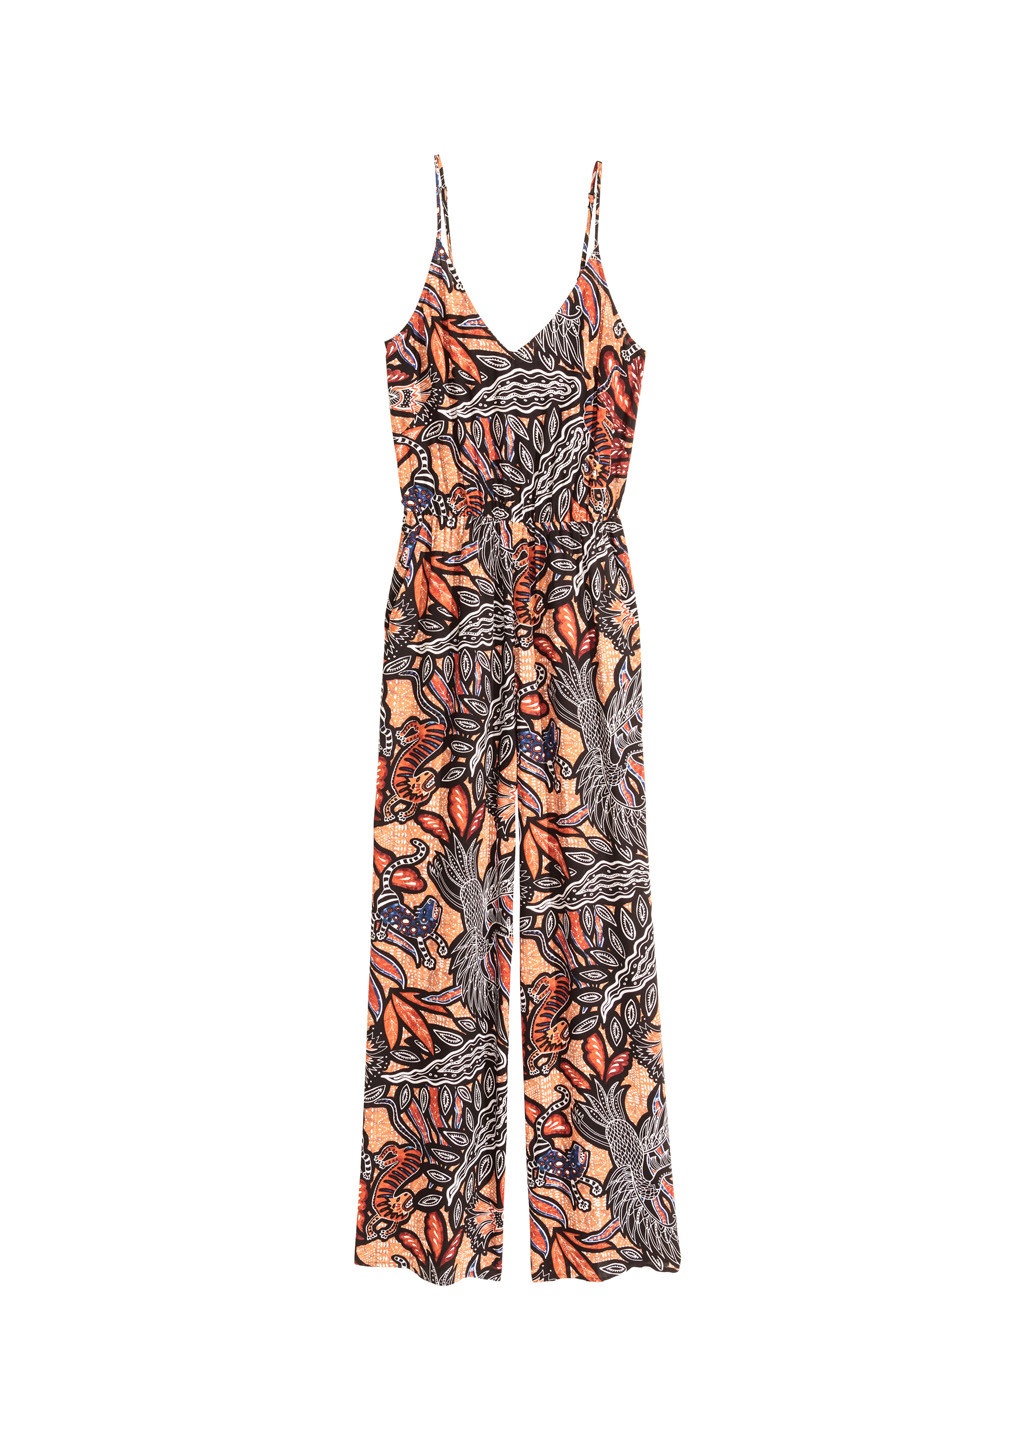 Комбинезон H&M комбинезон-брюки цветочный коричневый кэжуал вискоза